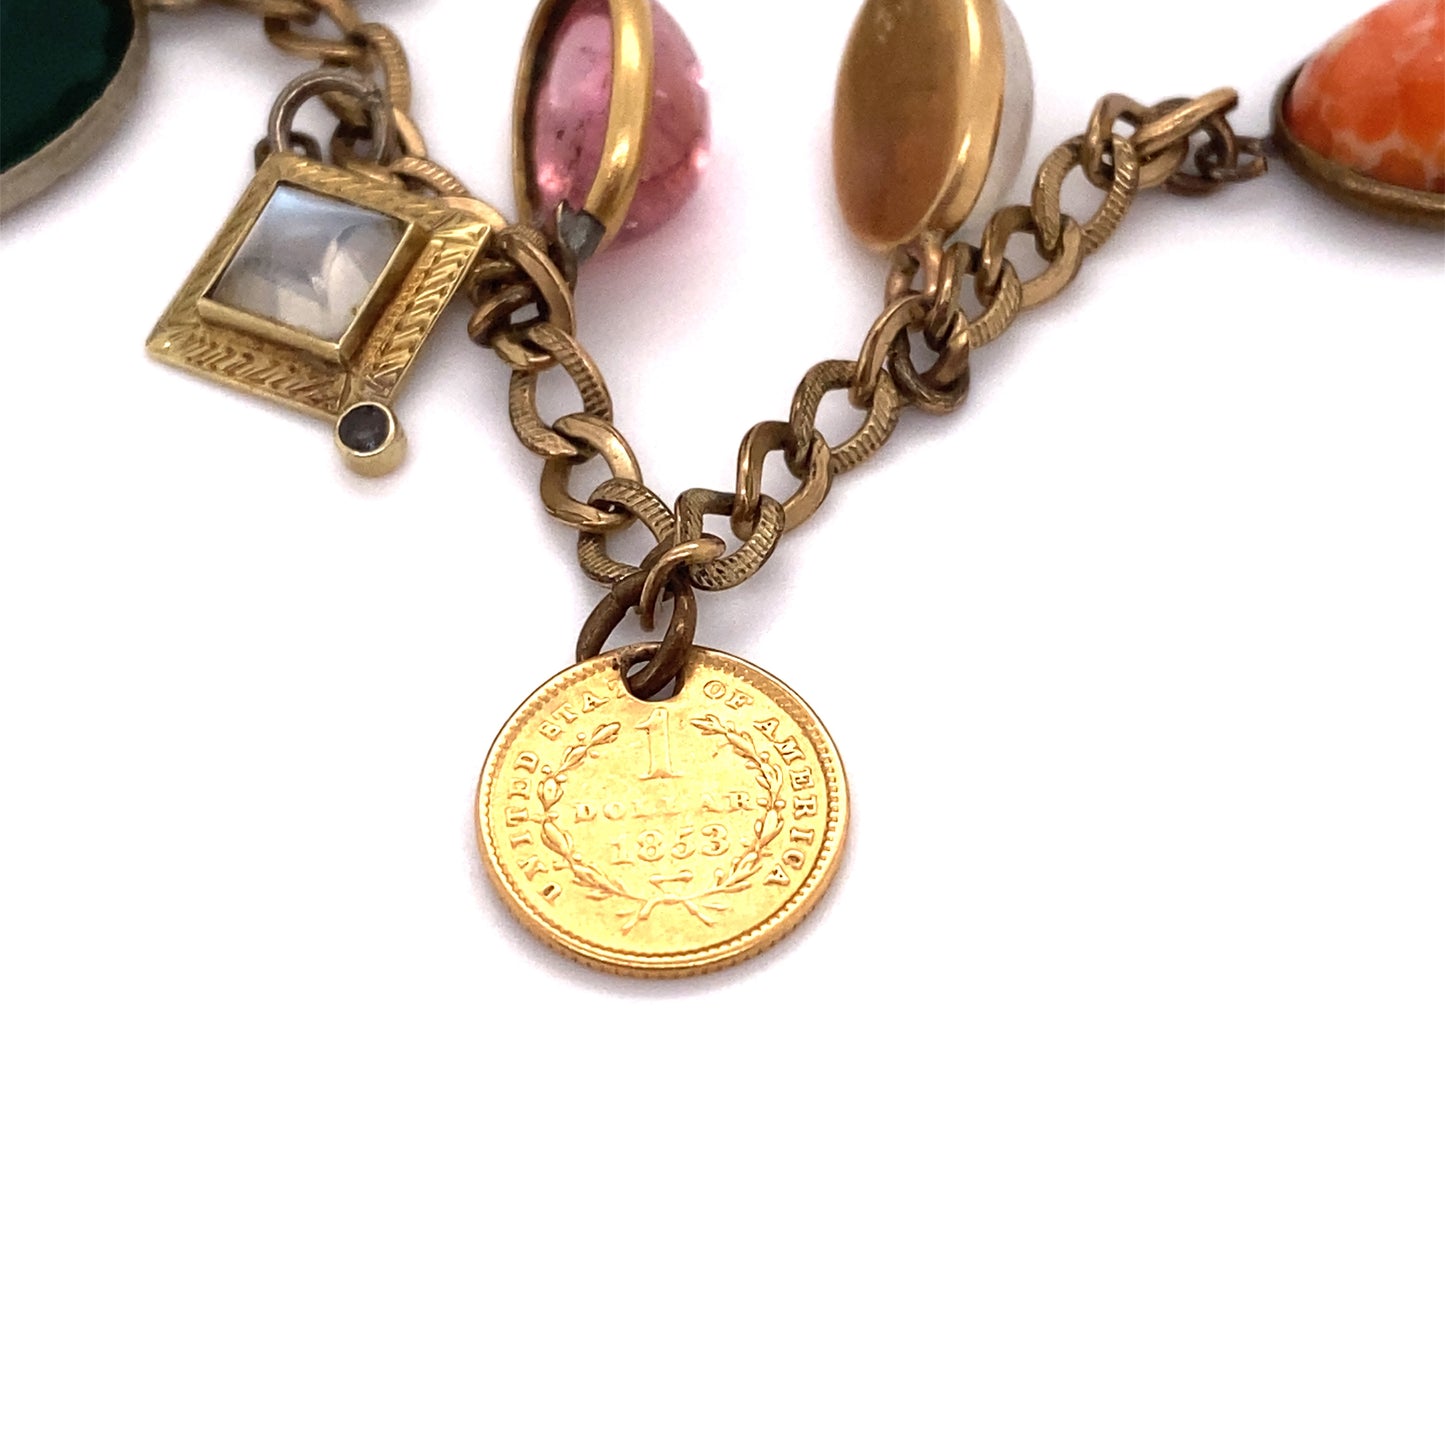 Circa 1915 Miscellaneous Multi Charm Bracelet in 14K Gold Fill